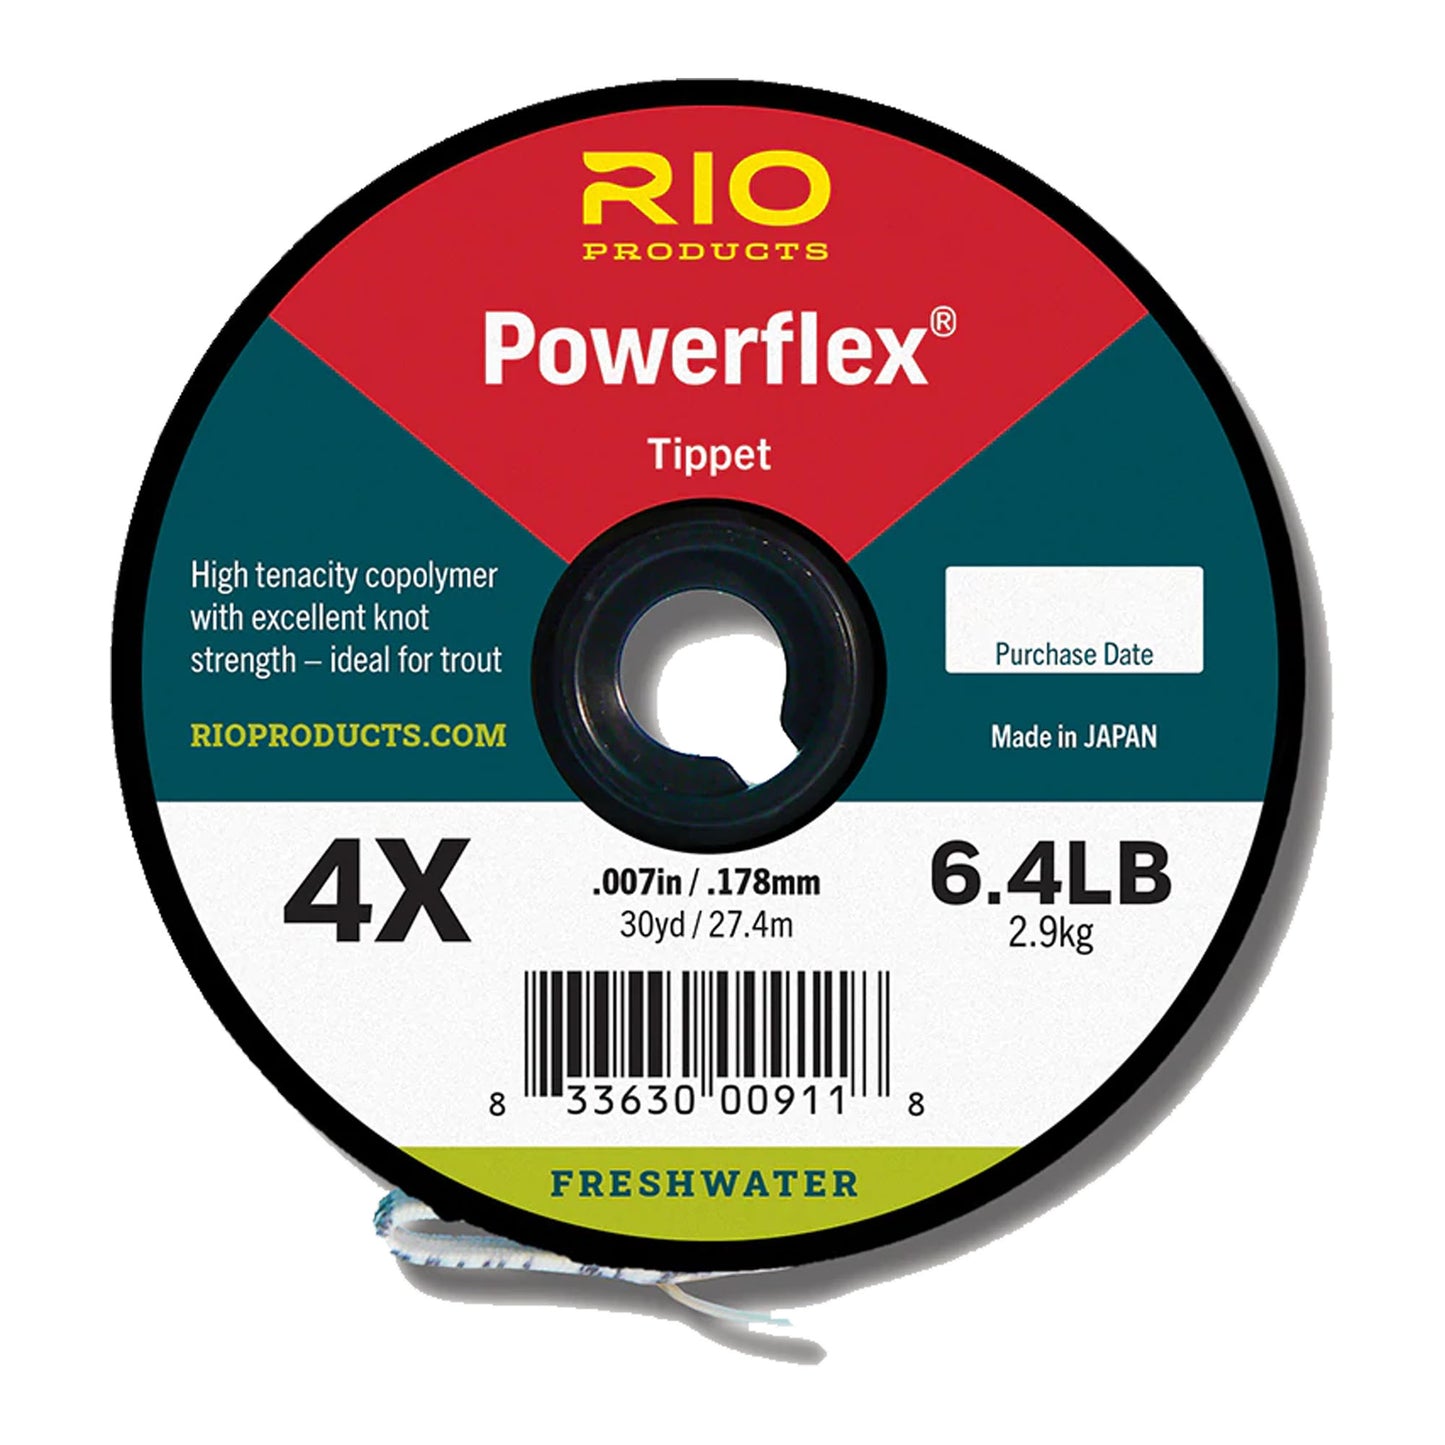 Powerflex Tippet - 5X